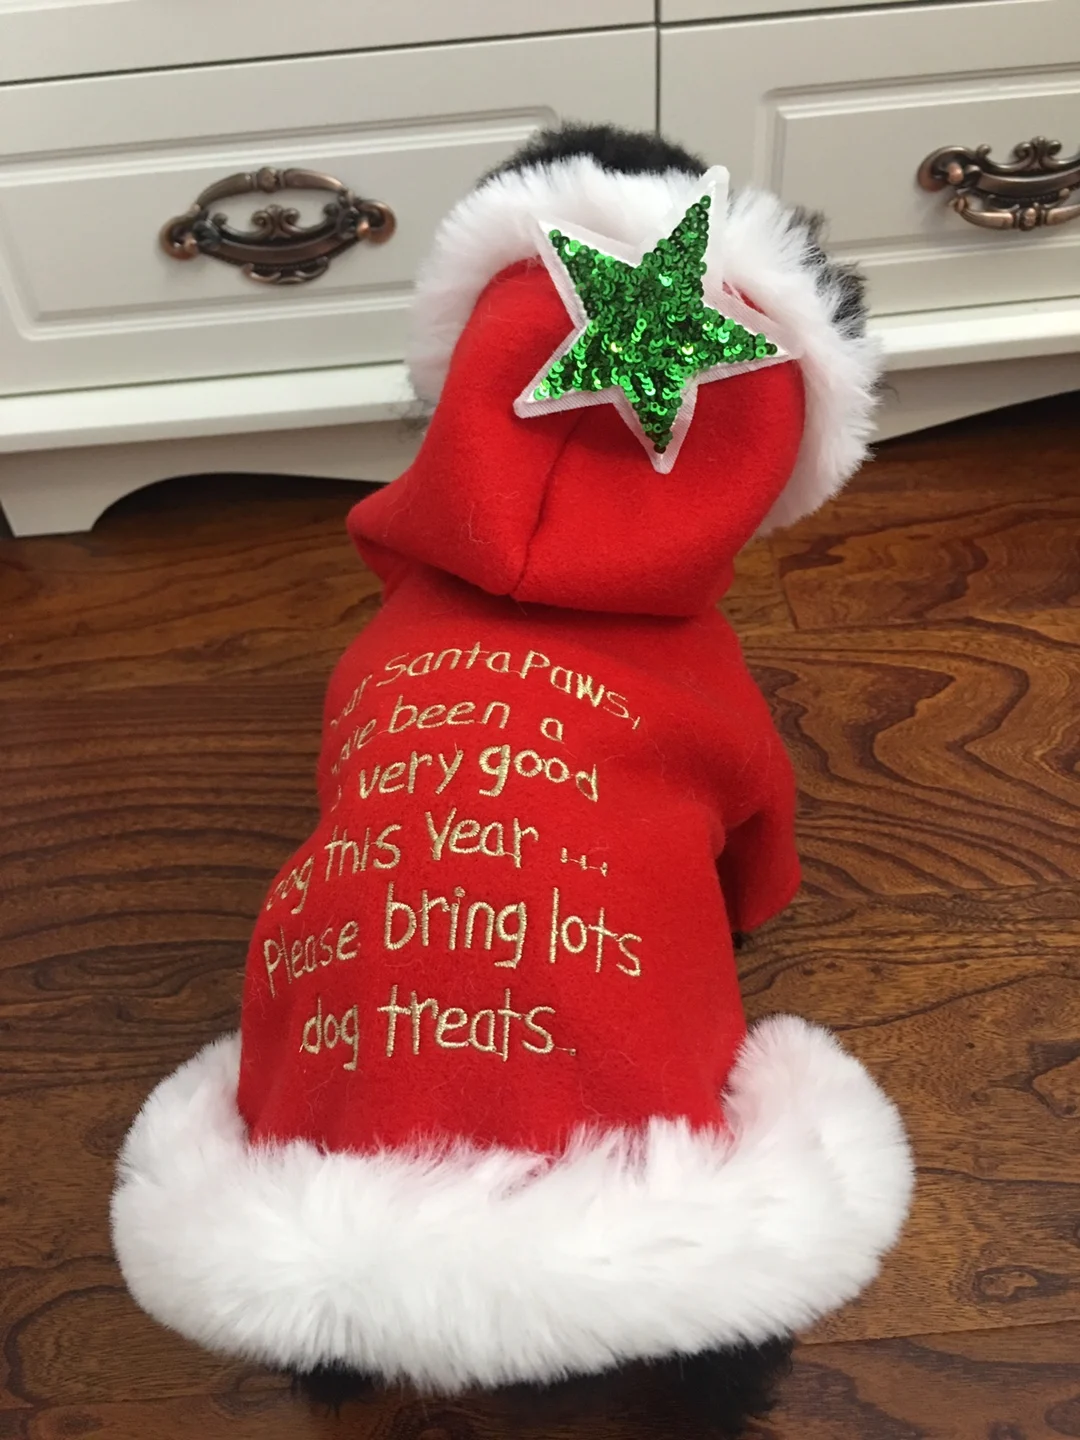 Зимний Рождественский костюм куртка для собаки плюшевая Одежда для собак новогодний плащ для собаки Флисовая теплая одежда для собак XS s m l xl